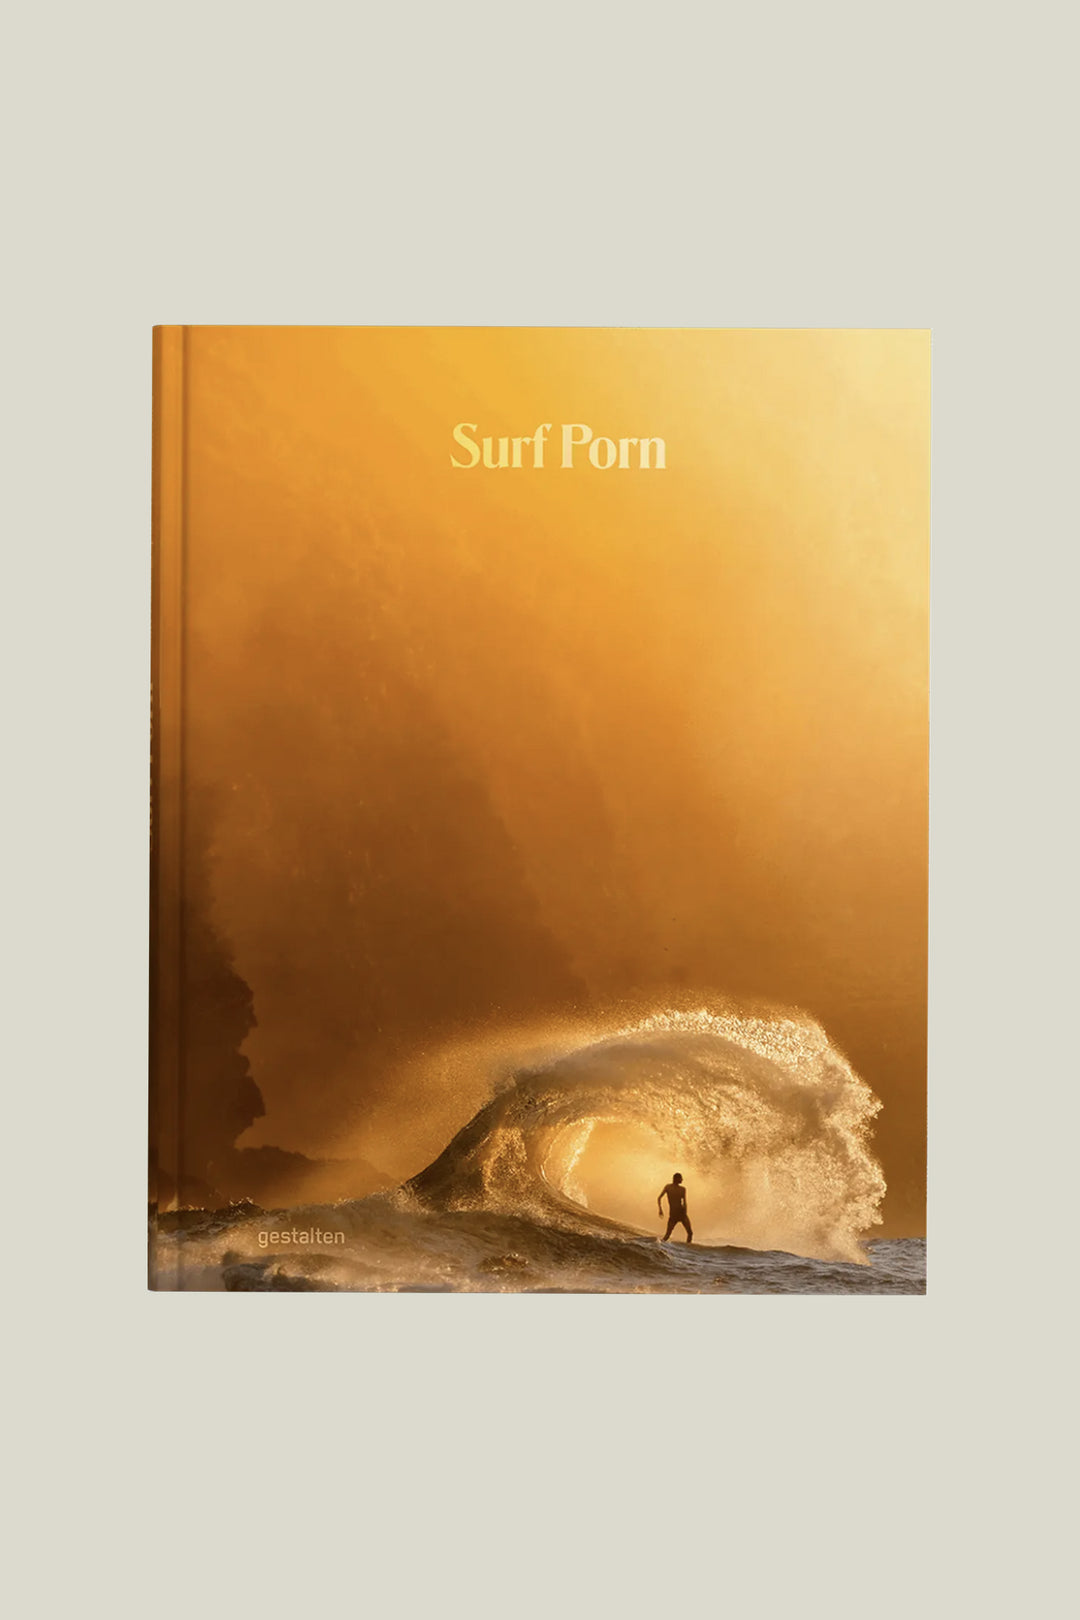 Surf Prn - The book